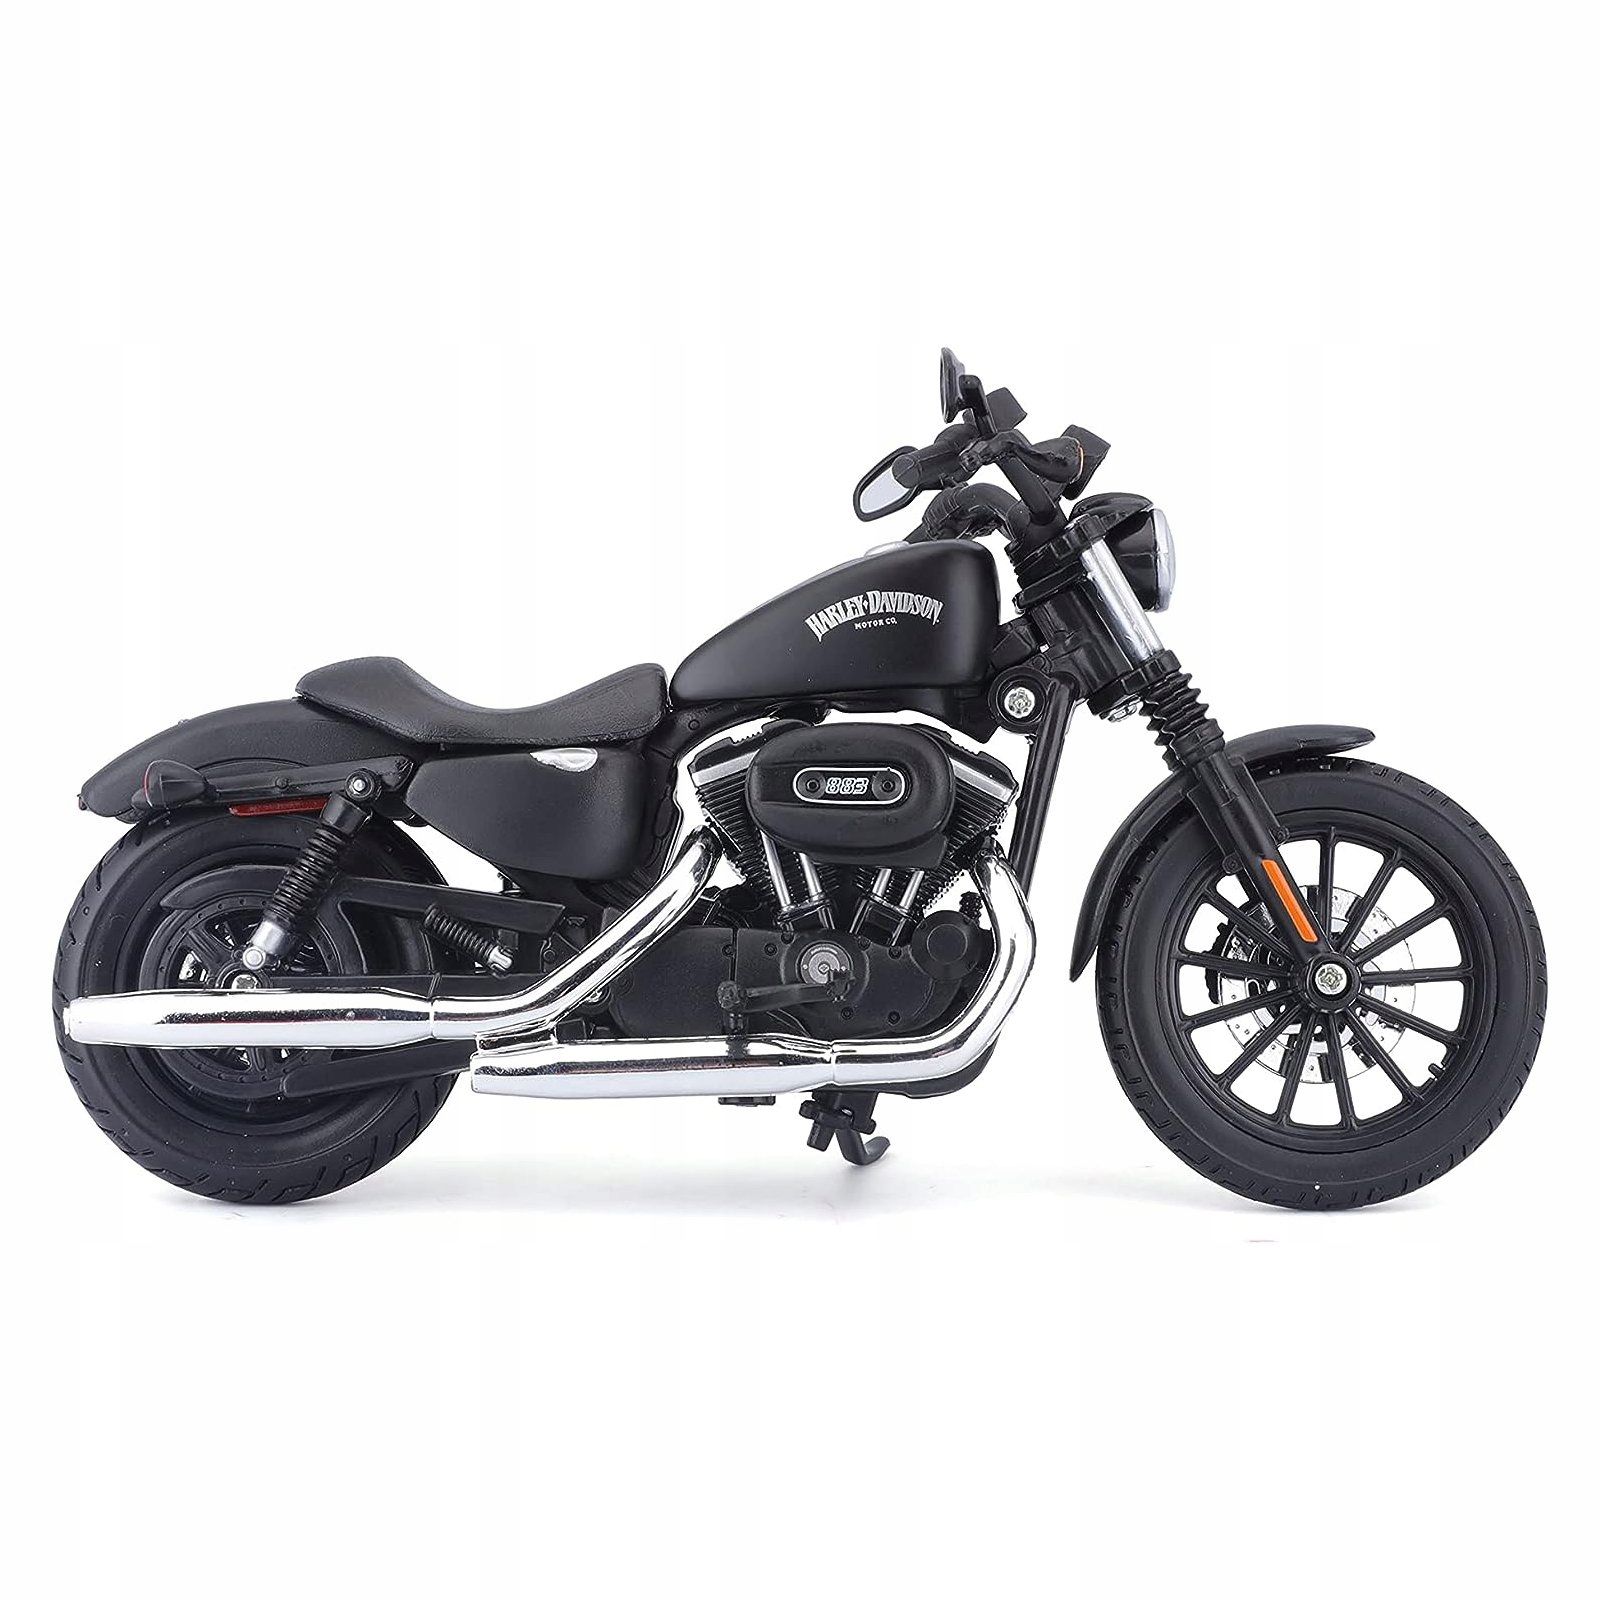 Harley Davidson 2014 Sportster Iron 883 skala 1:12